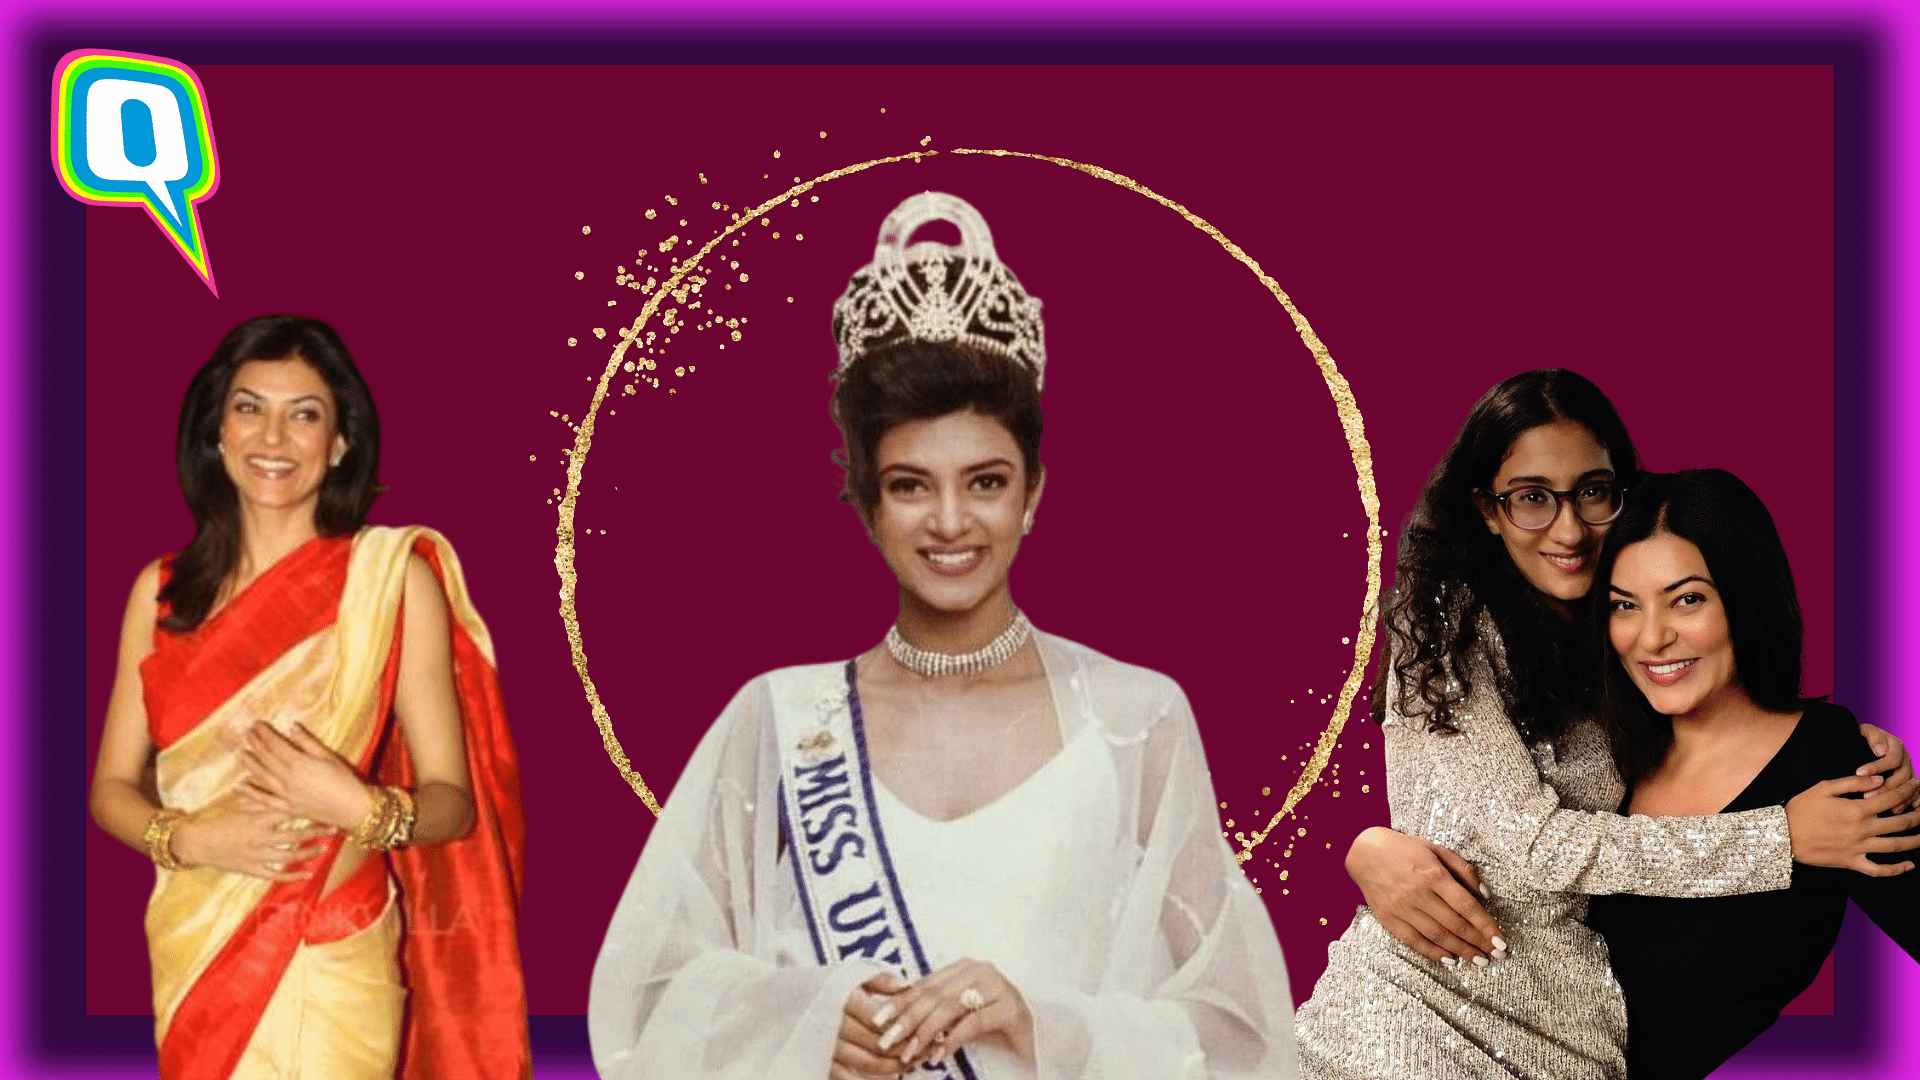 <div class="paragraphs"><p>Sushmita Sen, the former Miss Universe, turns 47 this year,&nbsp;</p></div>